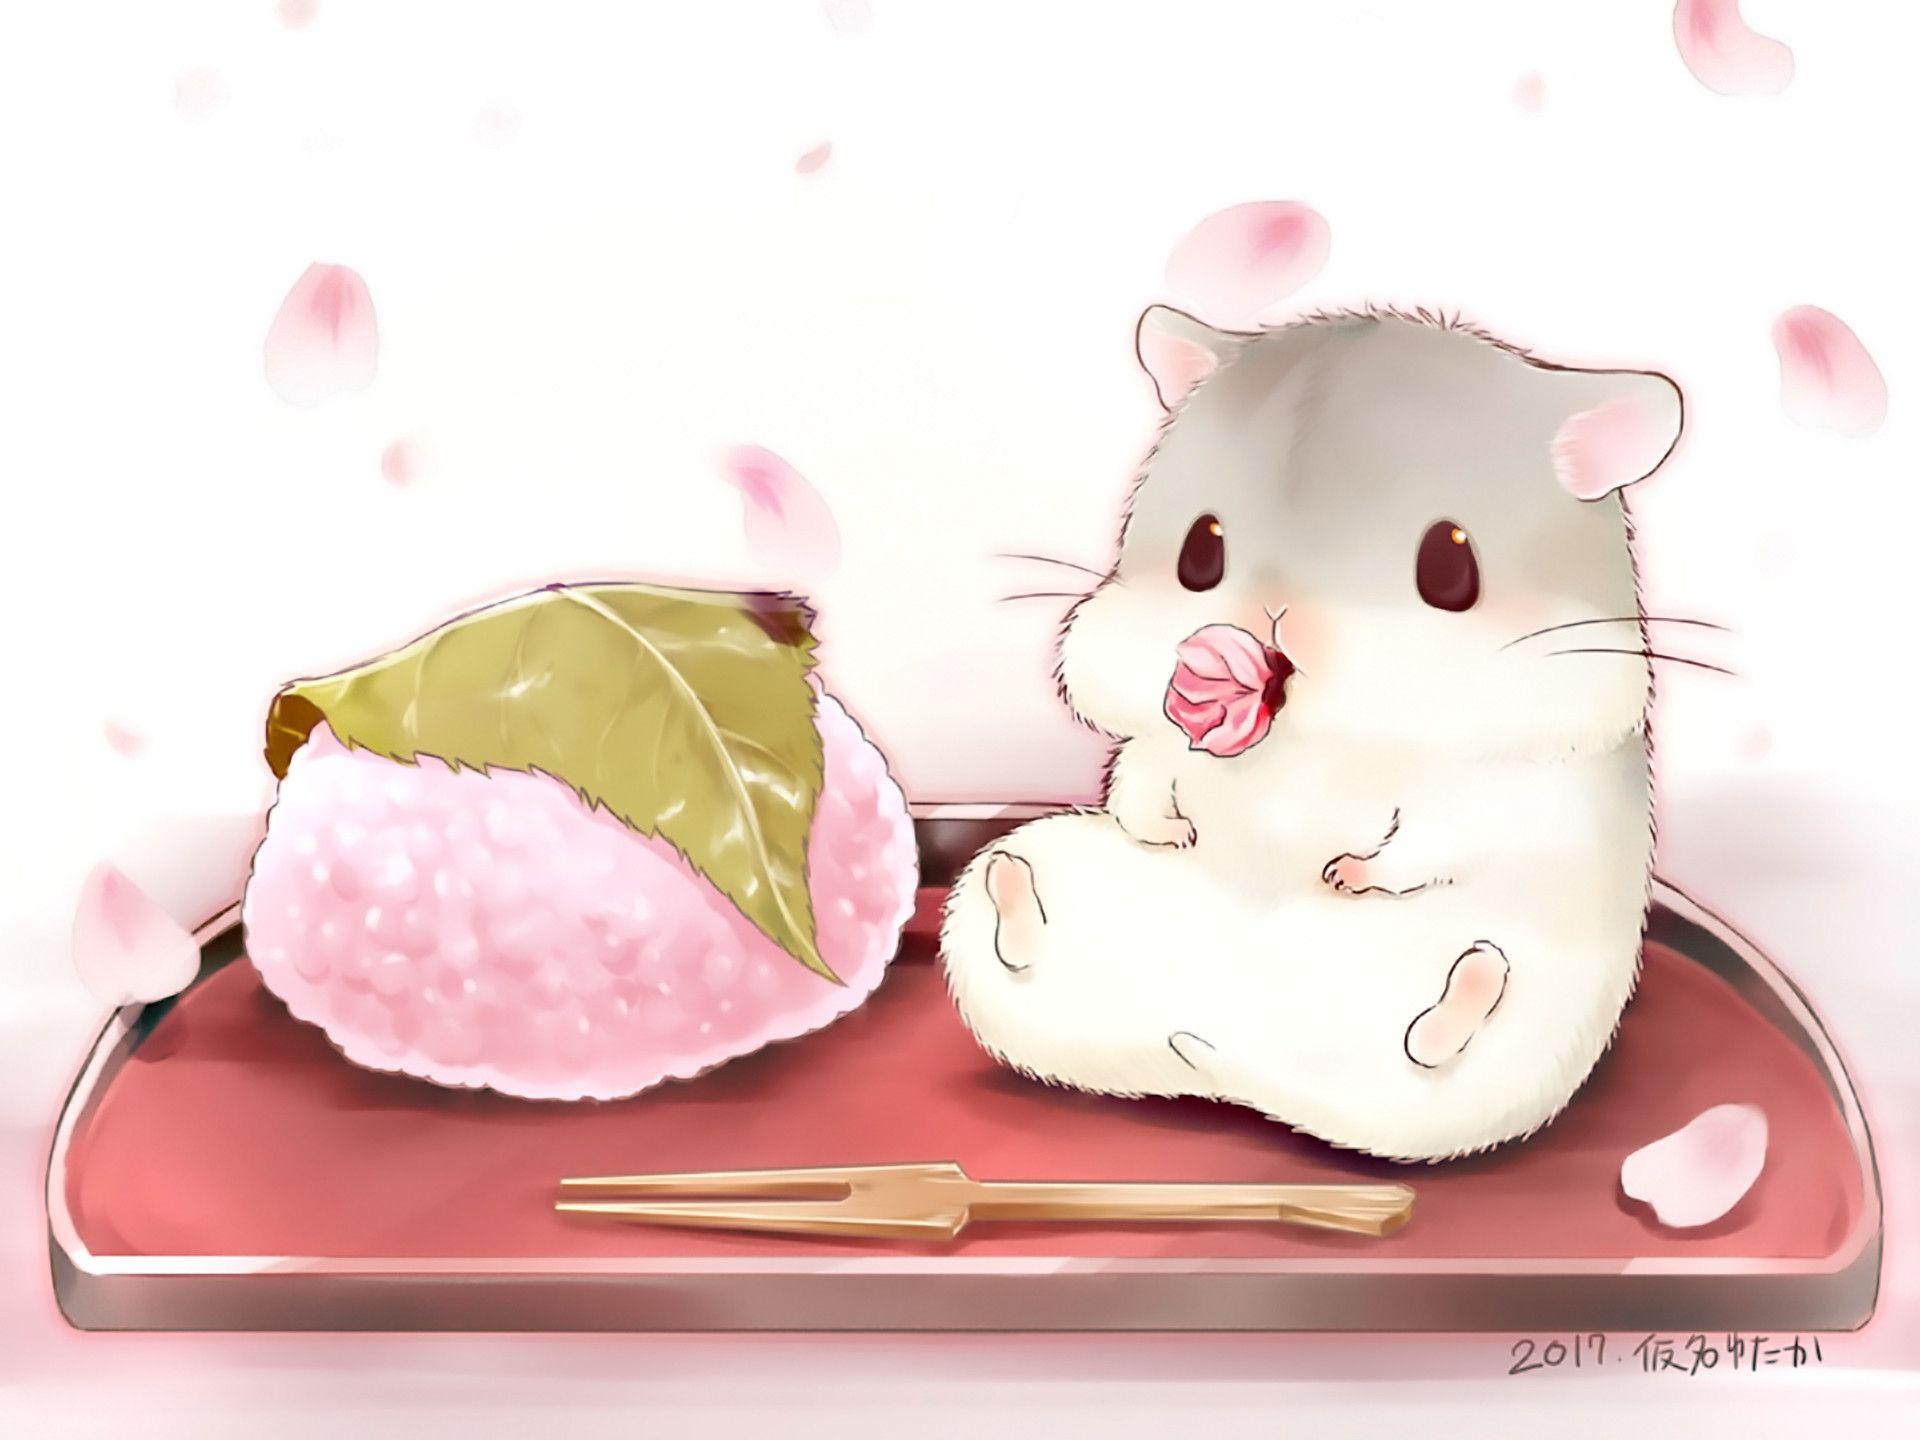 Res: 1920x Anime Hamster Cute Food Wallpaper